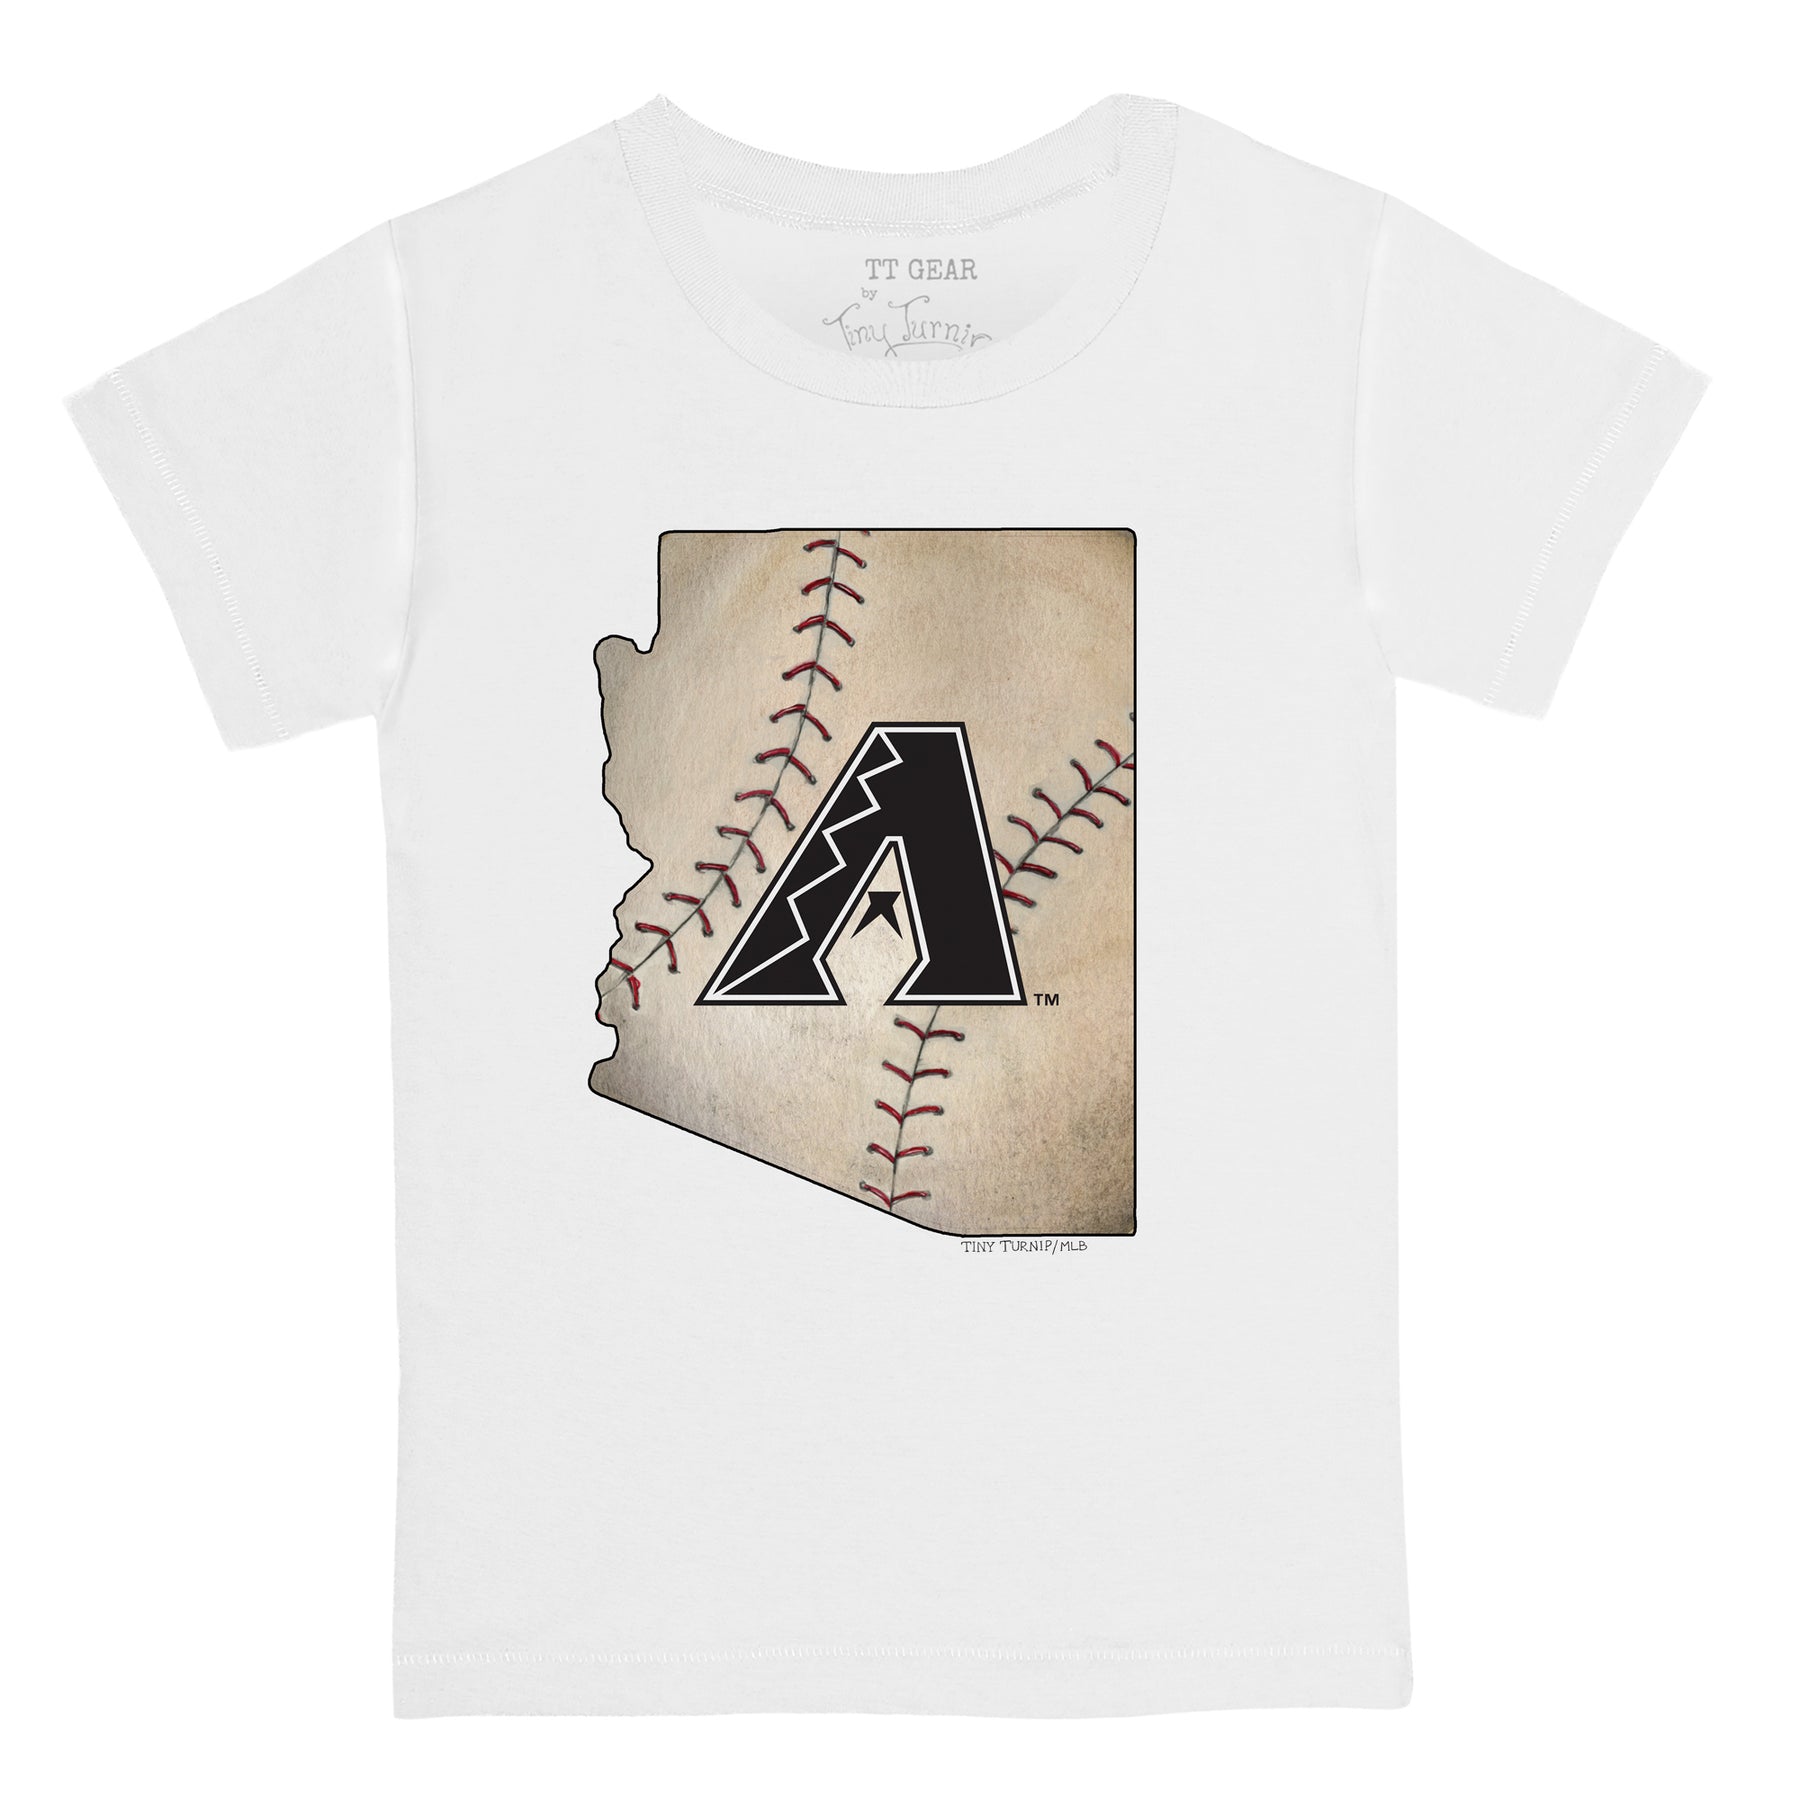 Arizona Diamondbacks Slugger Tee Shirt Youth XL (12-14) / White